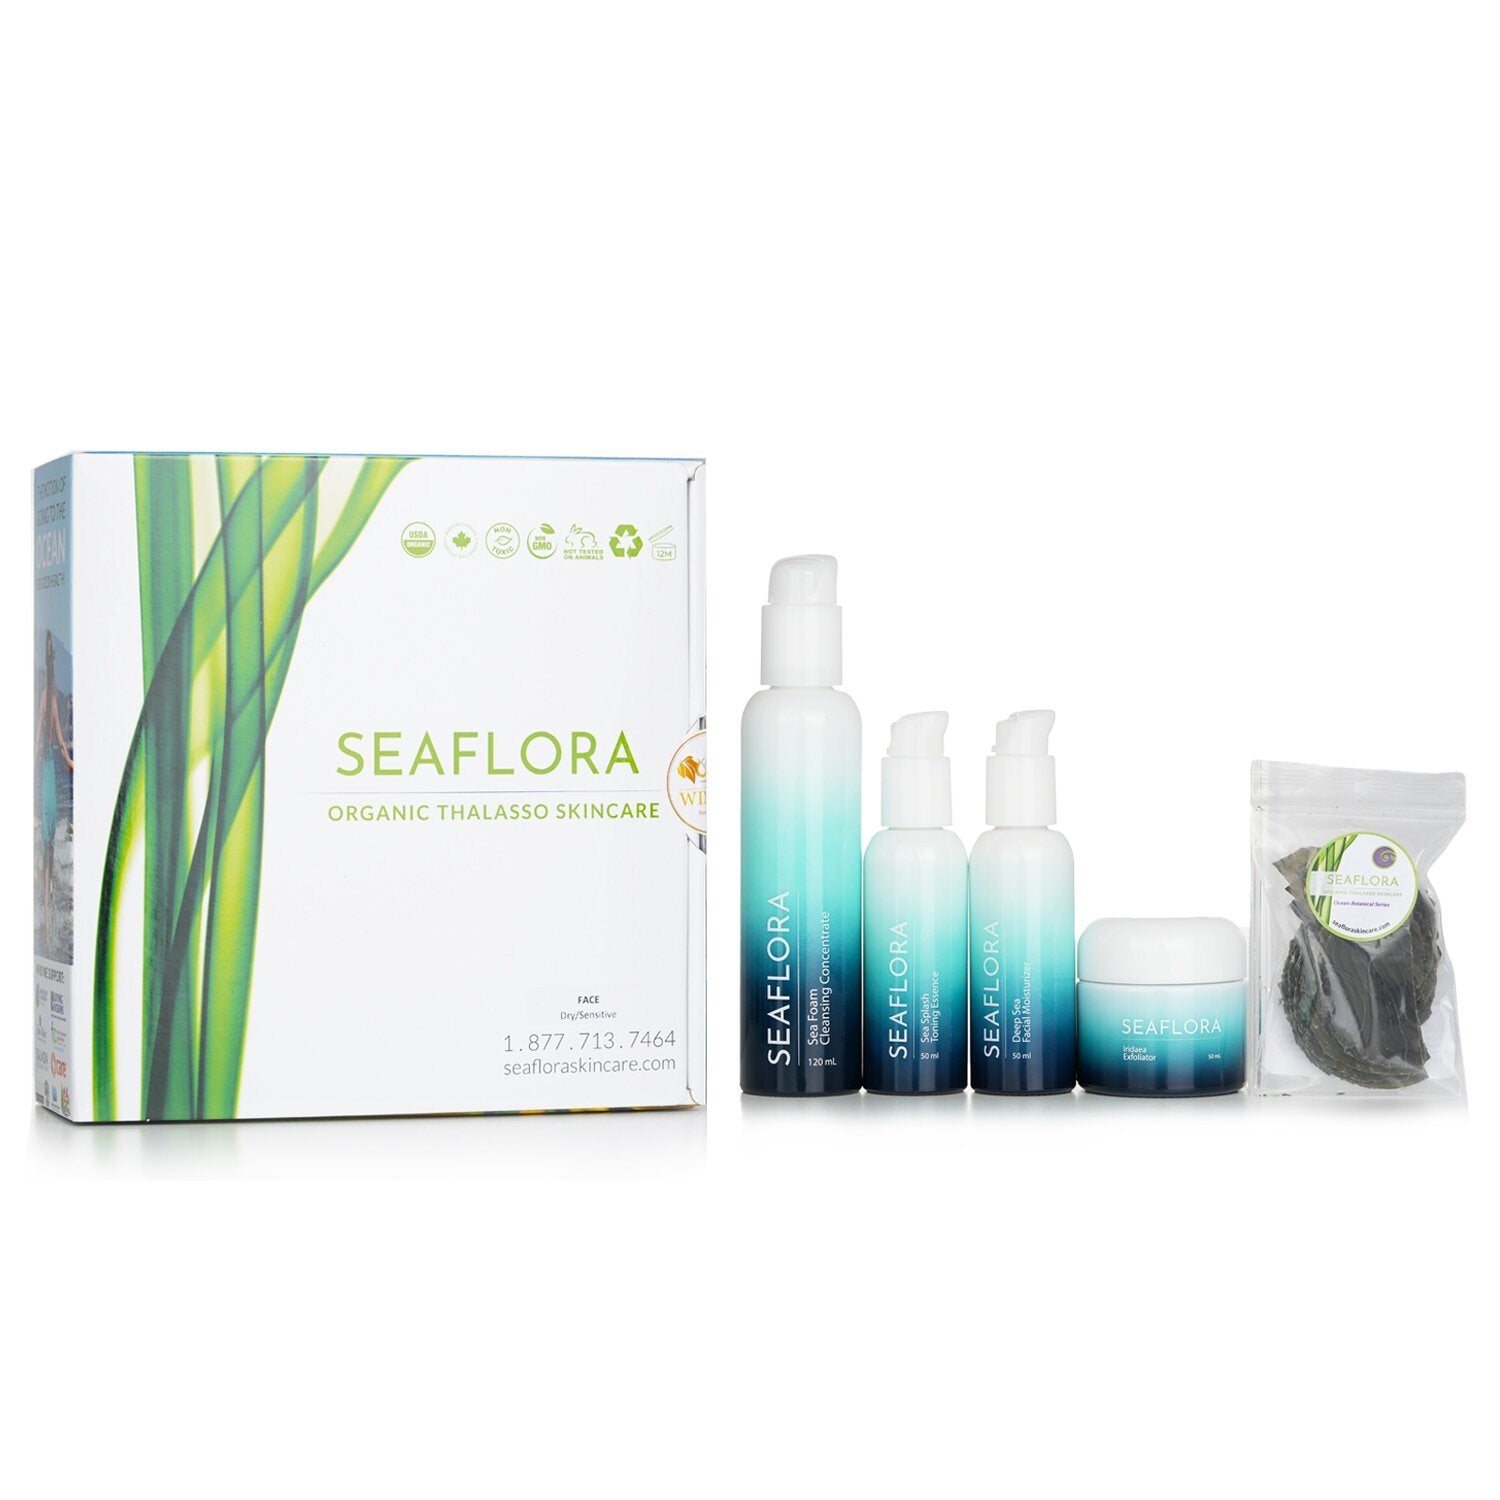 SEAFLORA Organic Thalasso Skincare Set: Cleansing, Essence, Exfoliator, Moisturizer, Eye Mask